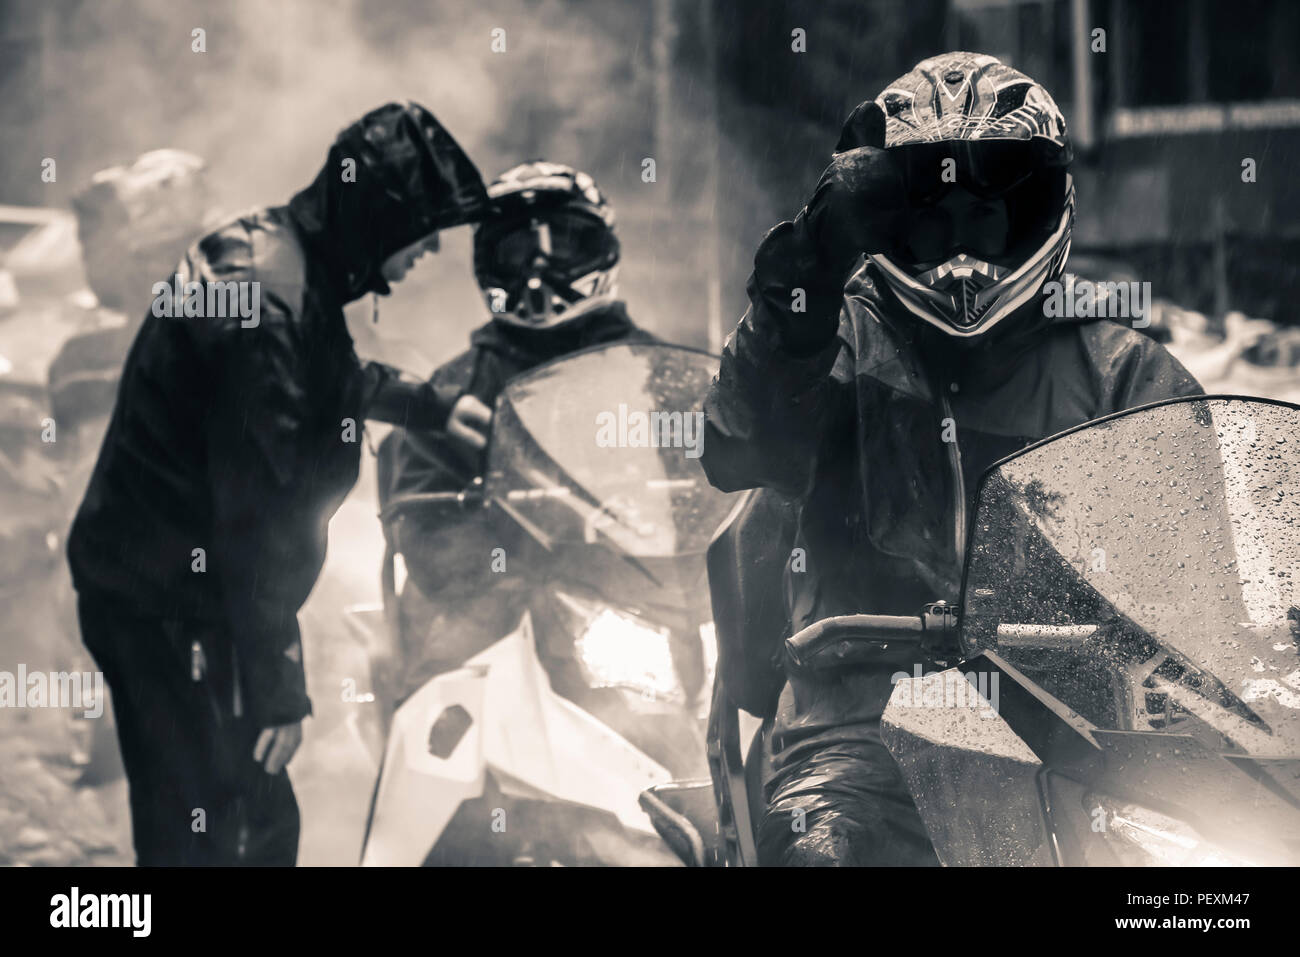 Men on snowmobiles, Whistler, British Columbia, Canada Stock Photo